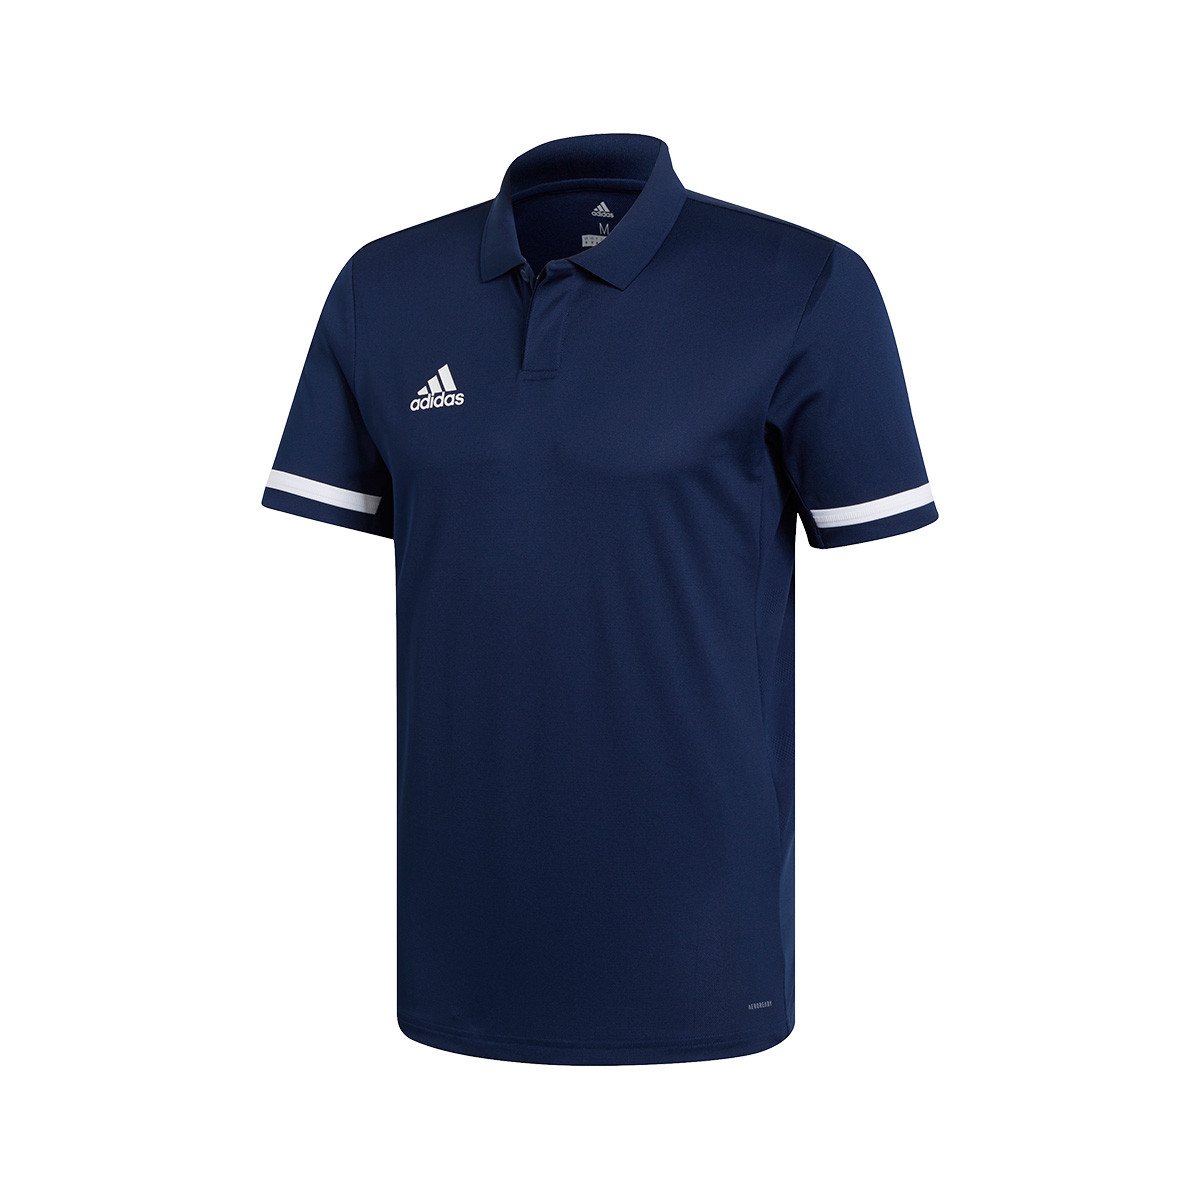 Polo shirt adidas Team 19 m/c Navy blue 